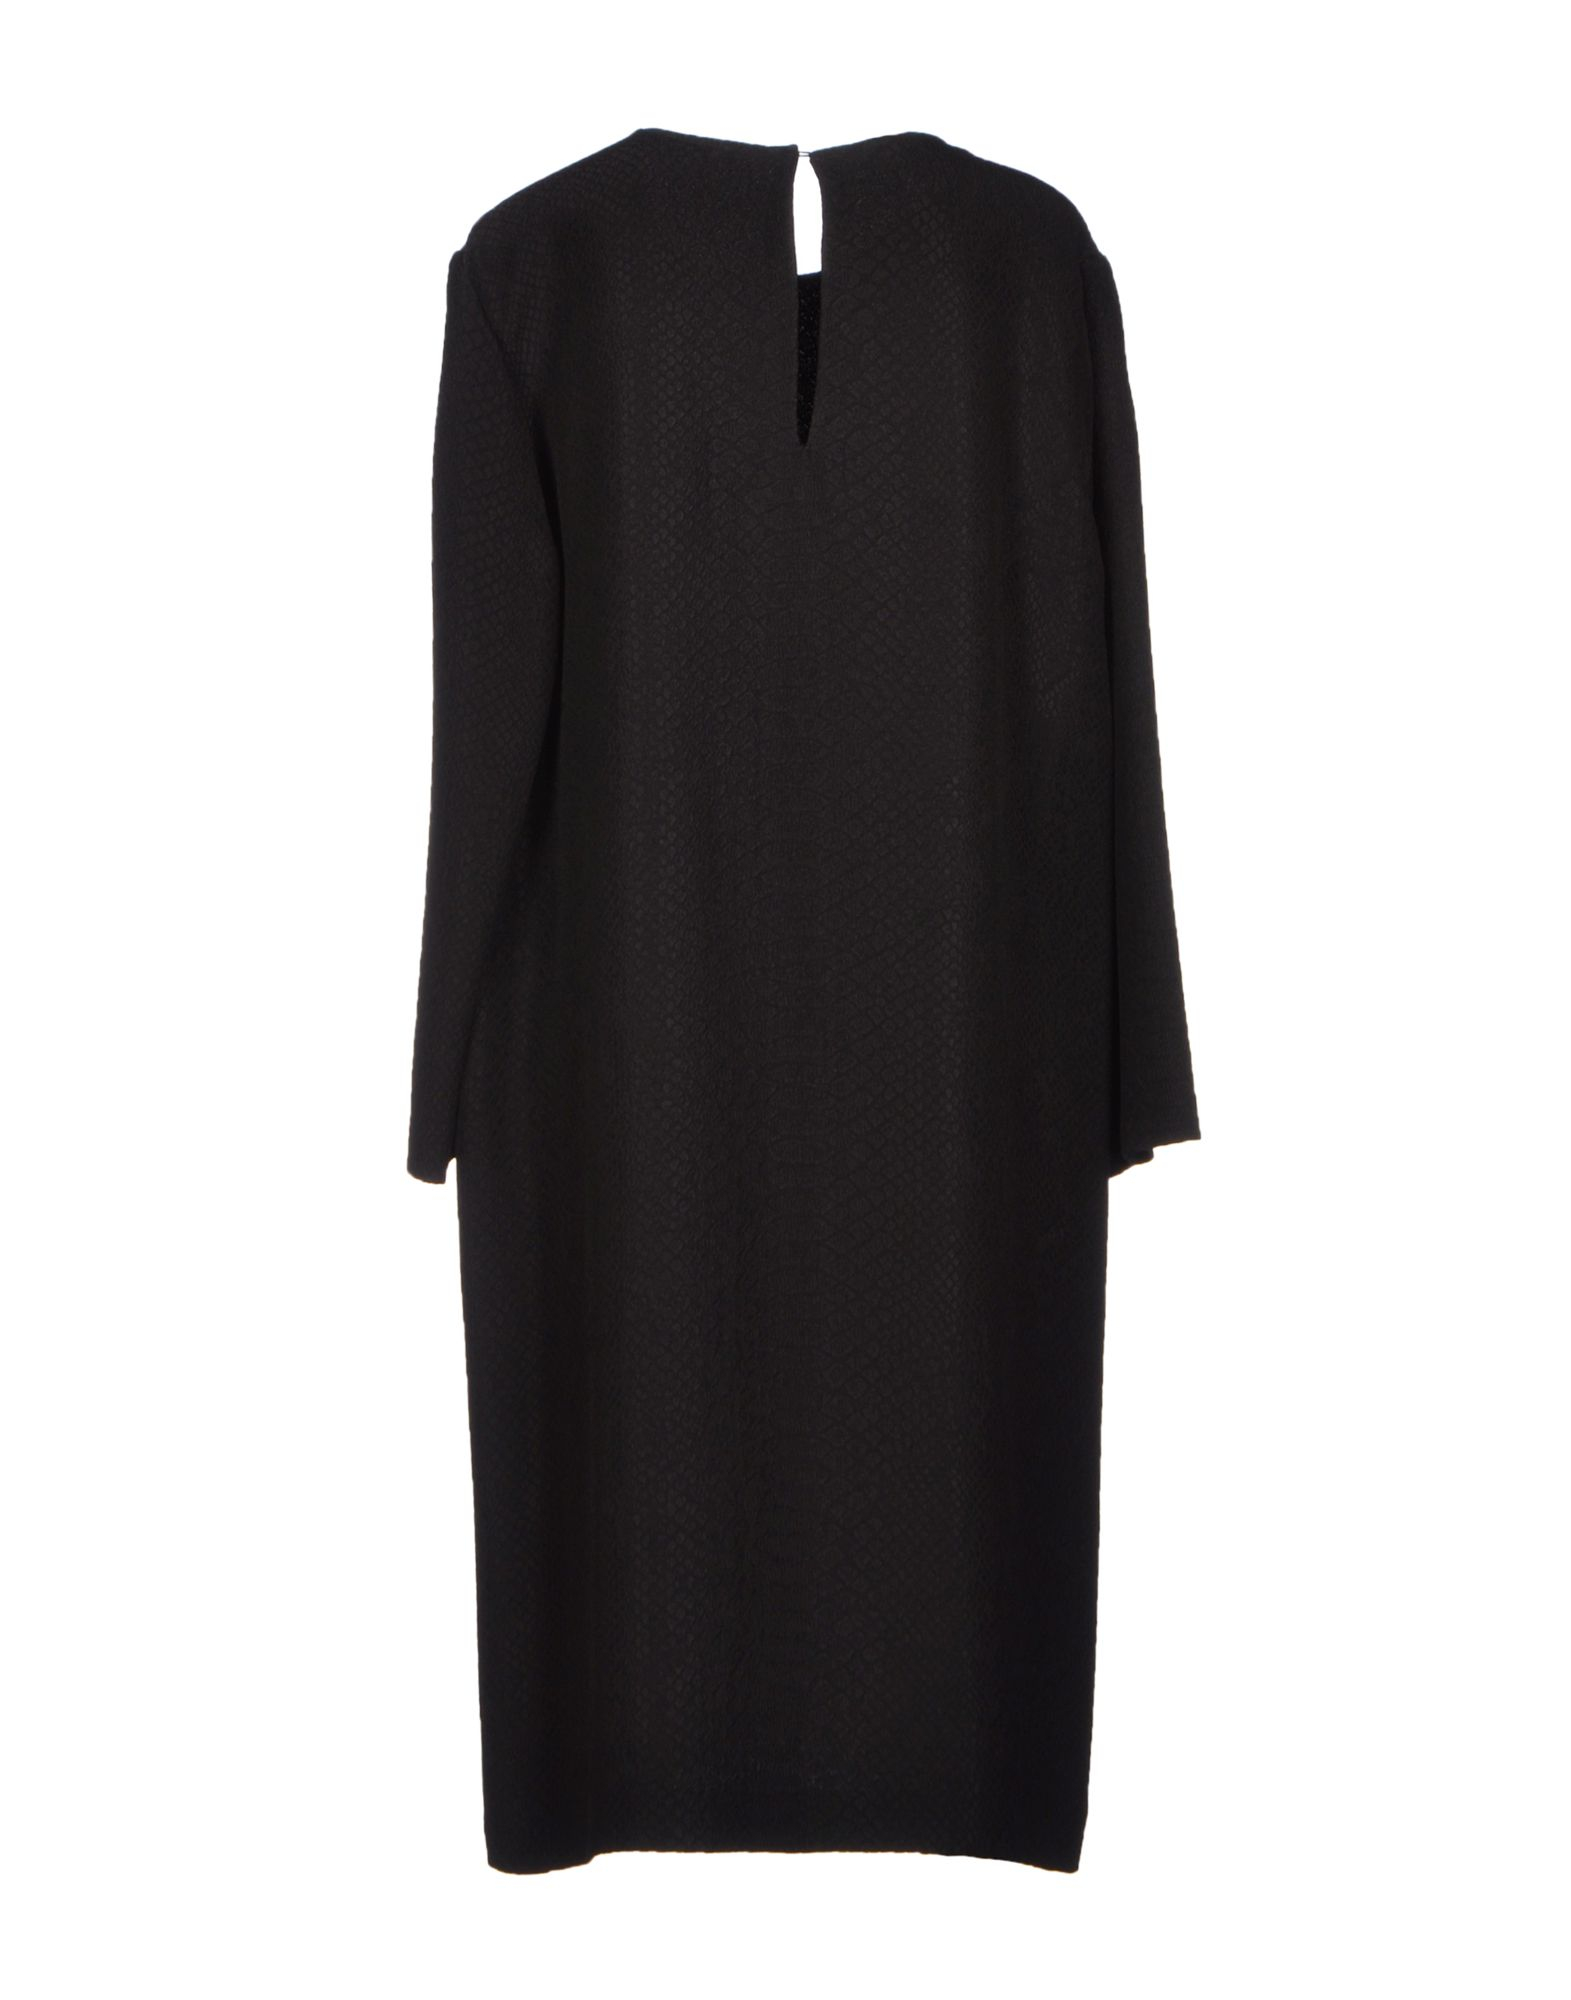 Stella mccartney Plain Weave Jacquard Black Knee Length Dress in Black ...